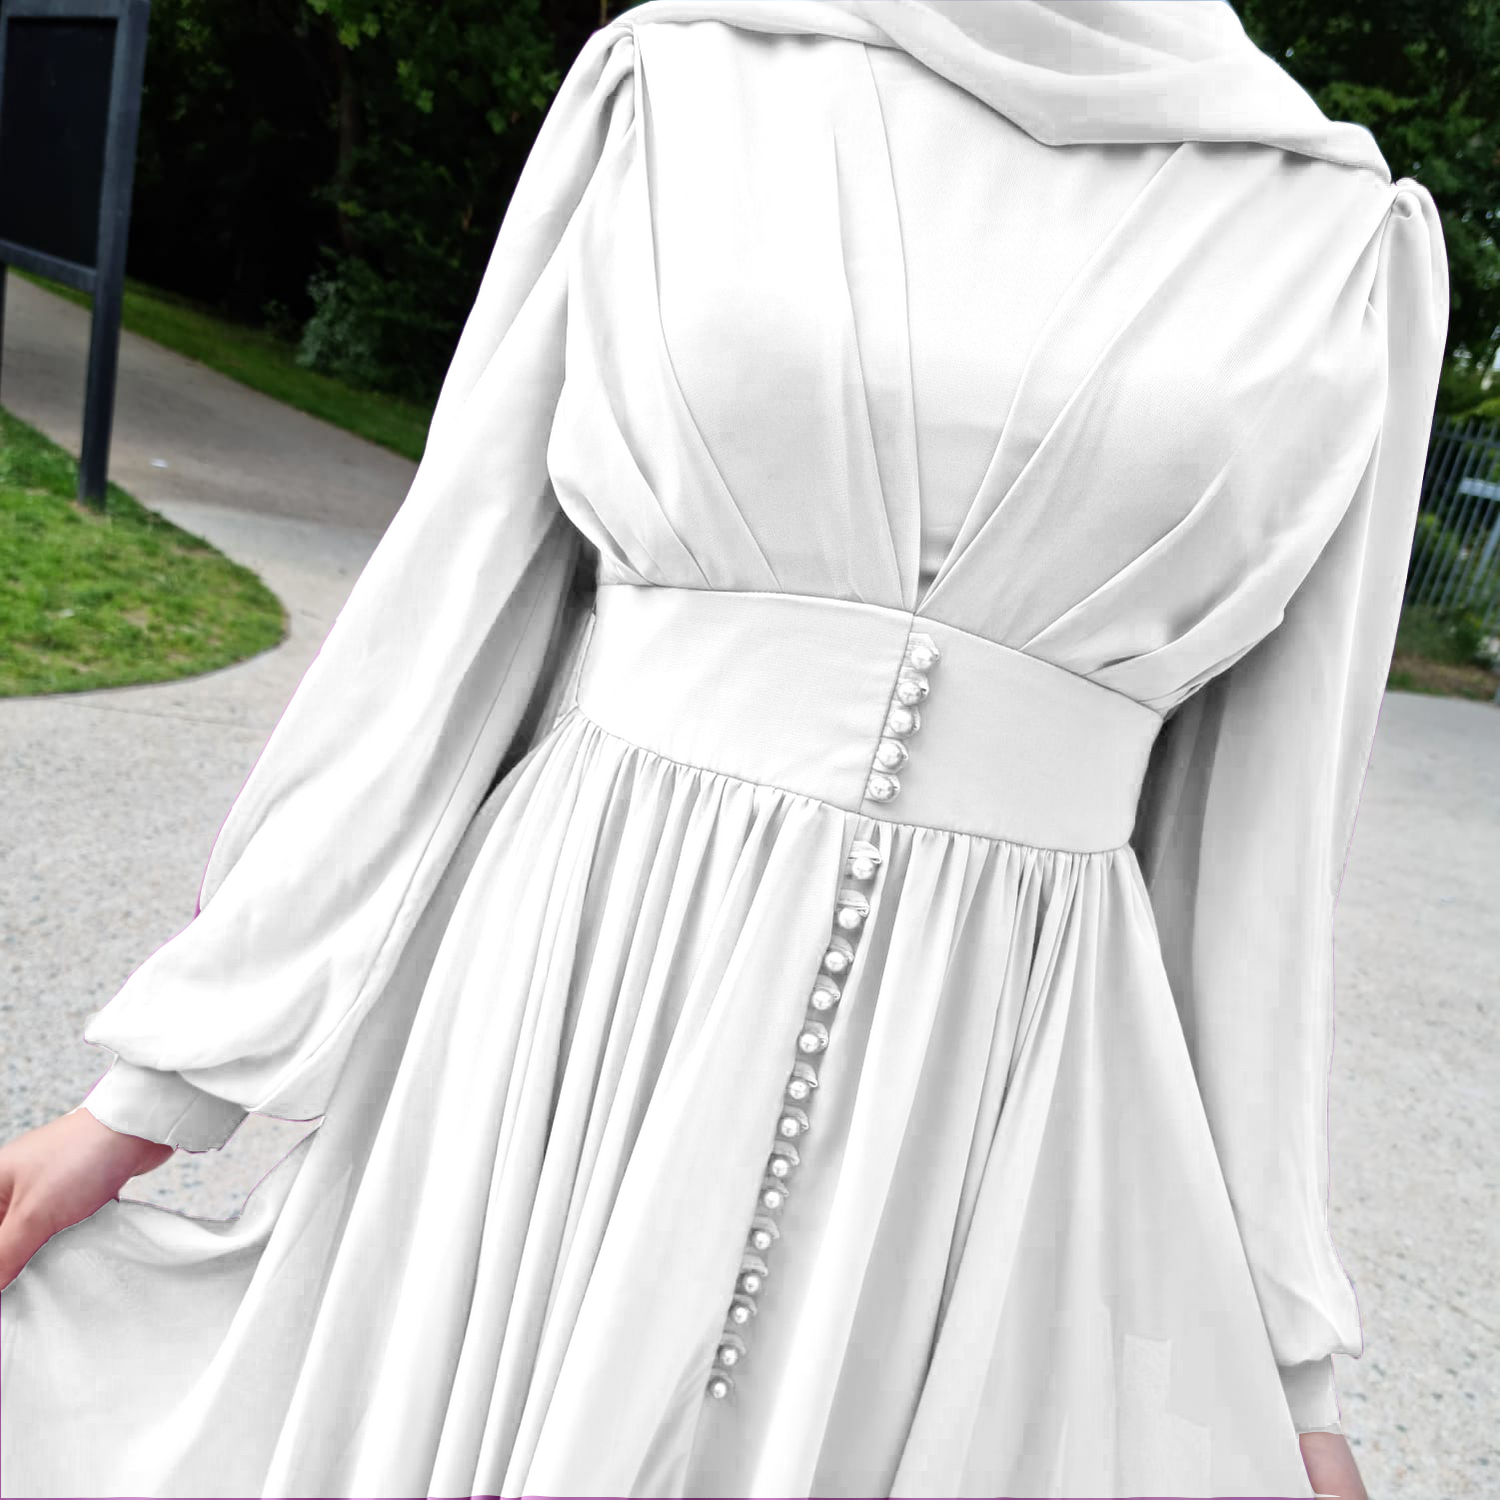 Niyya mastour long white dress